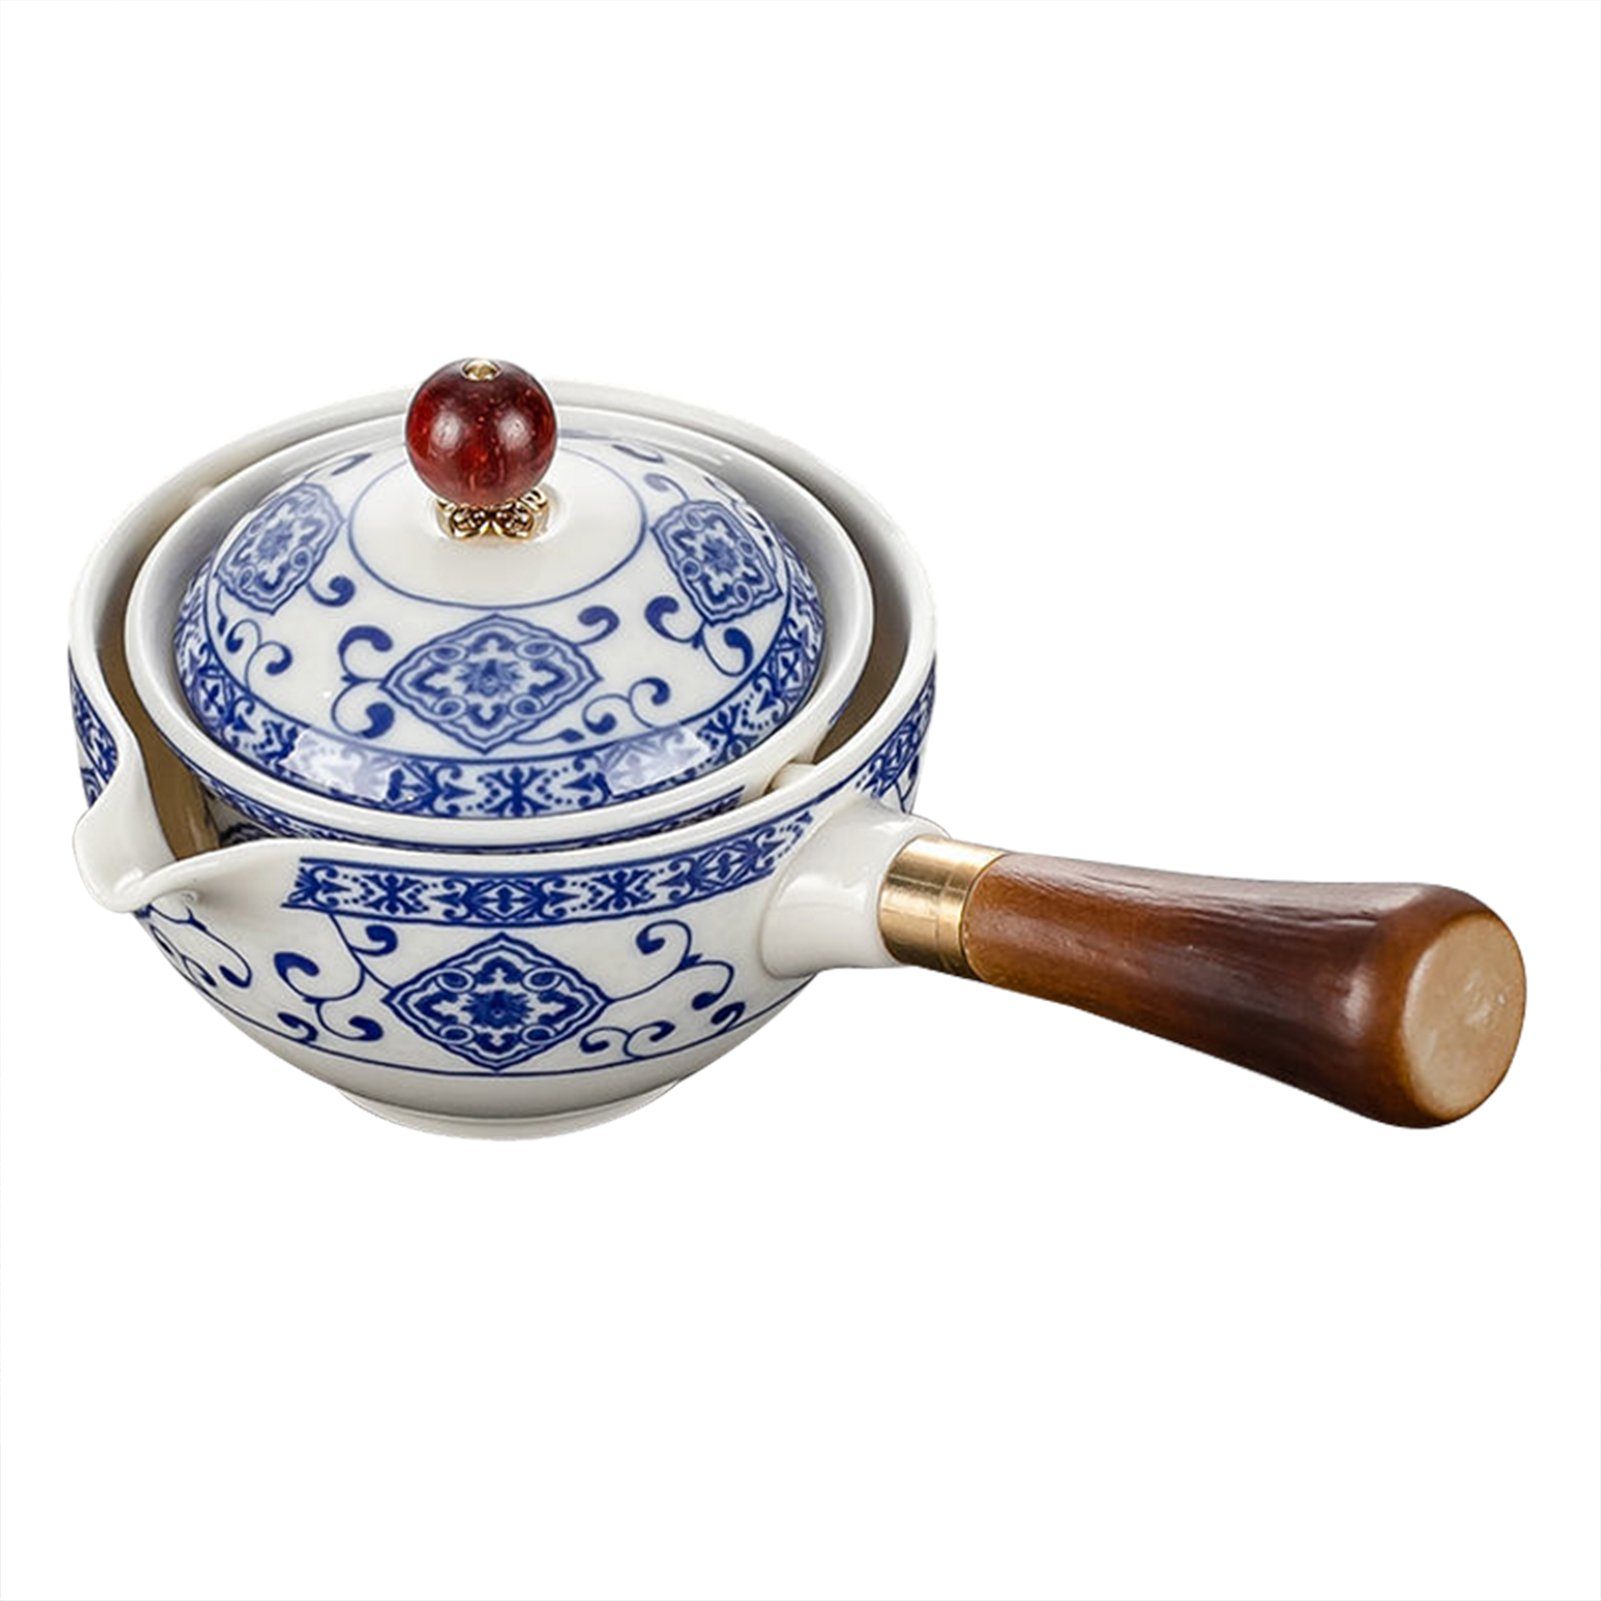 Blusmart Teekanne 360° Drehbarer Teekocher Aus Porzellan, Chinesischer, Teekanne